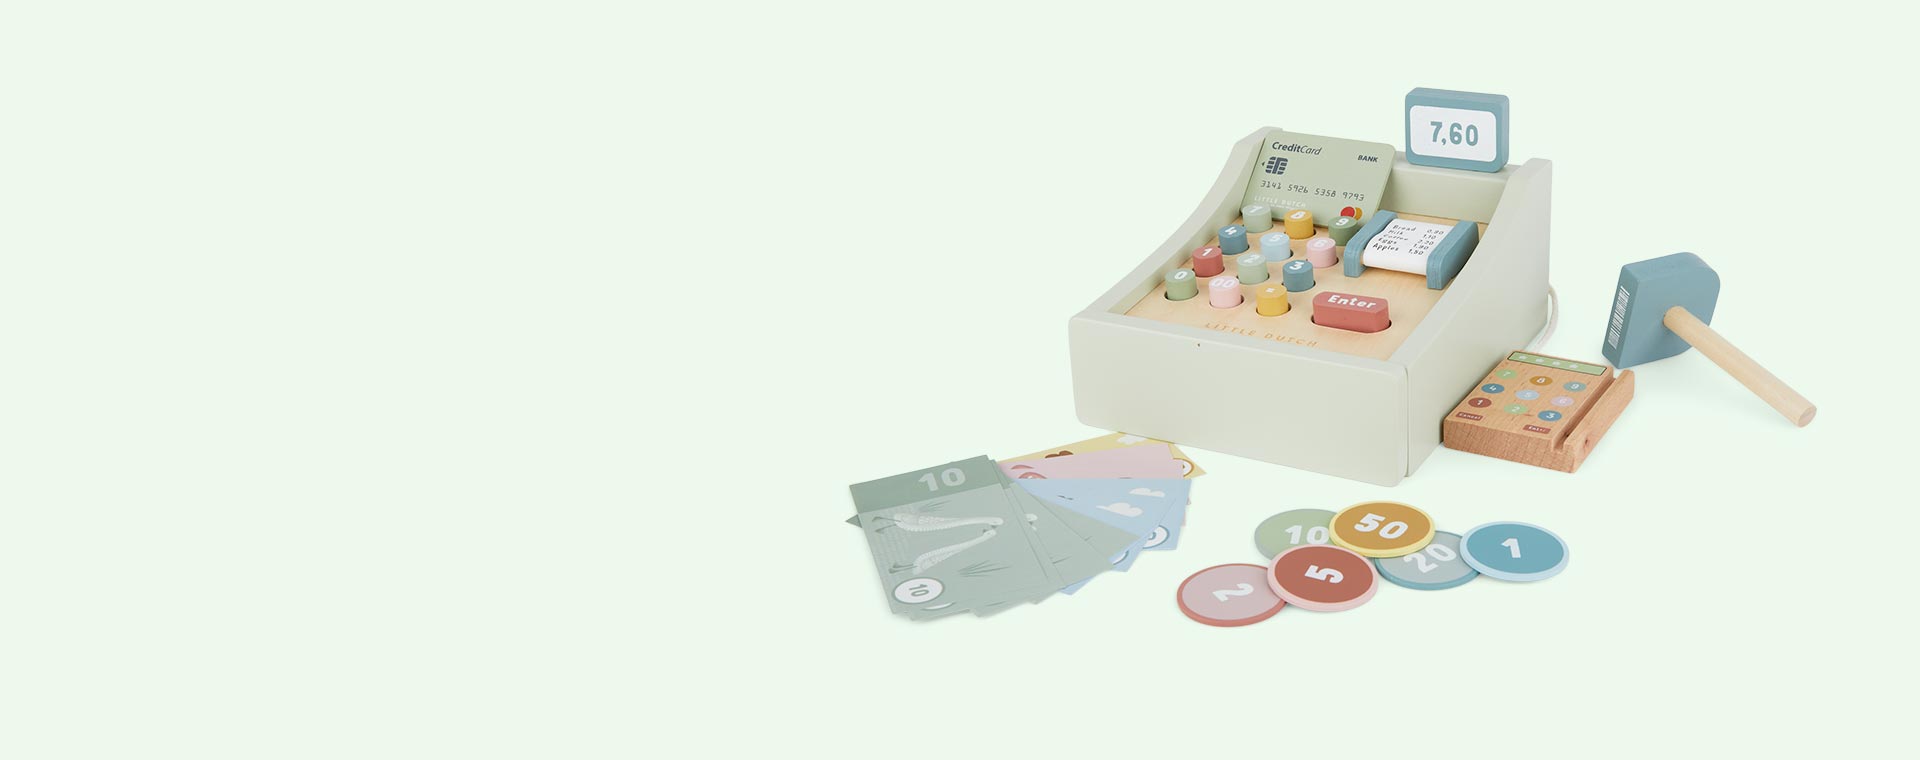 Mint Green Little Dutch Toy Cash Register With Scanner